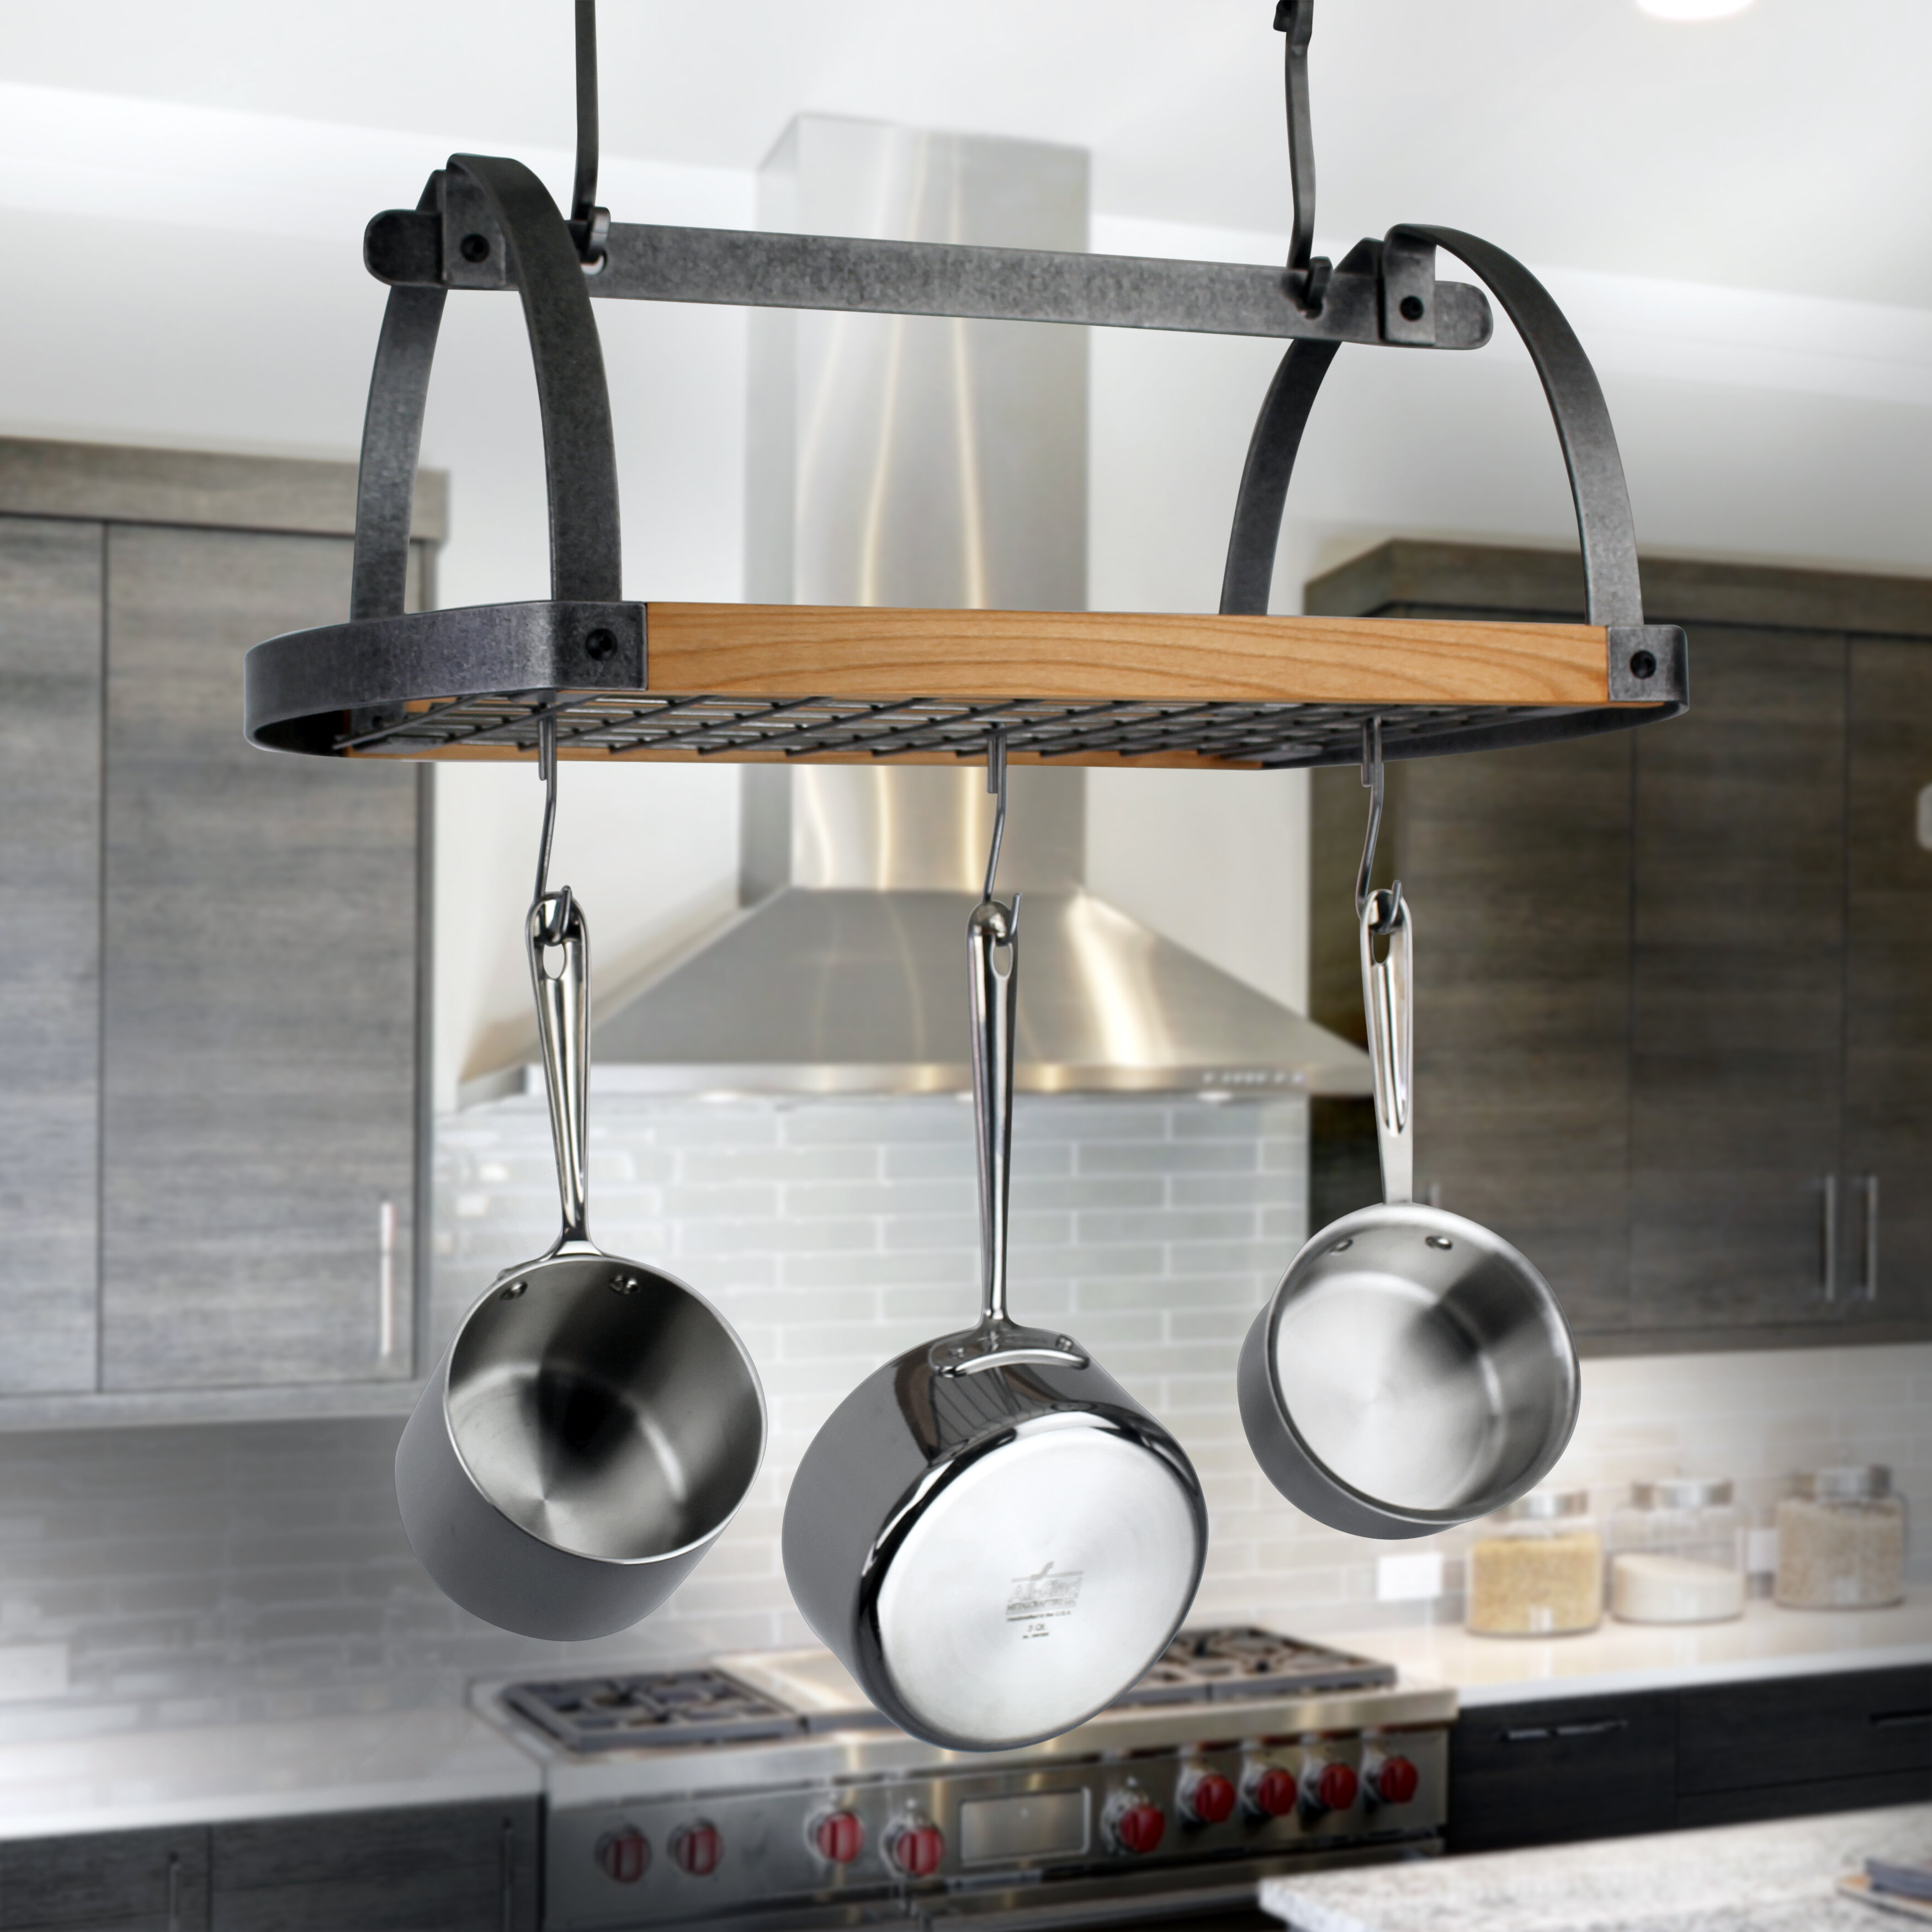 Details about   Copper Pot Rack Oval Ceiling Hanging Cookware Storage Pan Holder Hanger Kitchen 